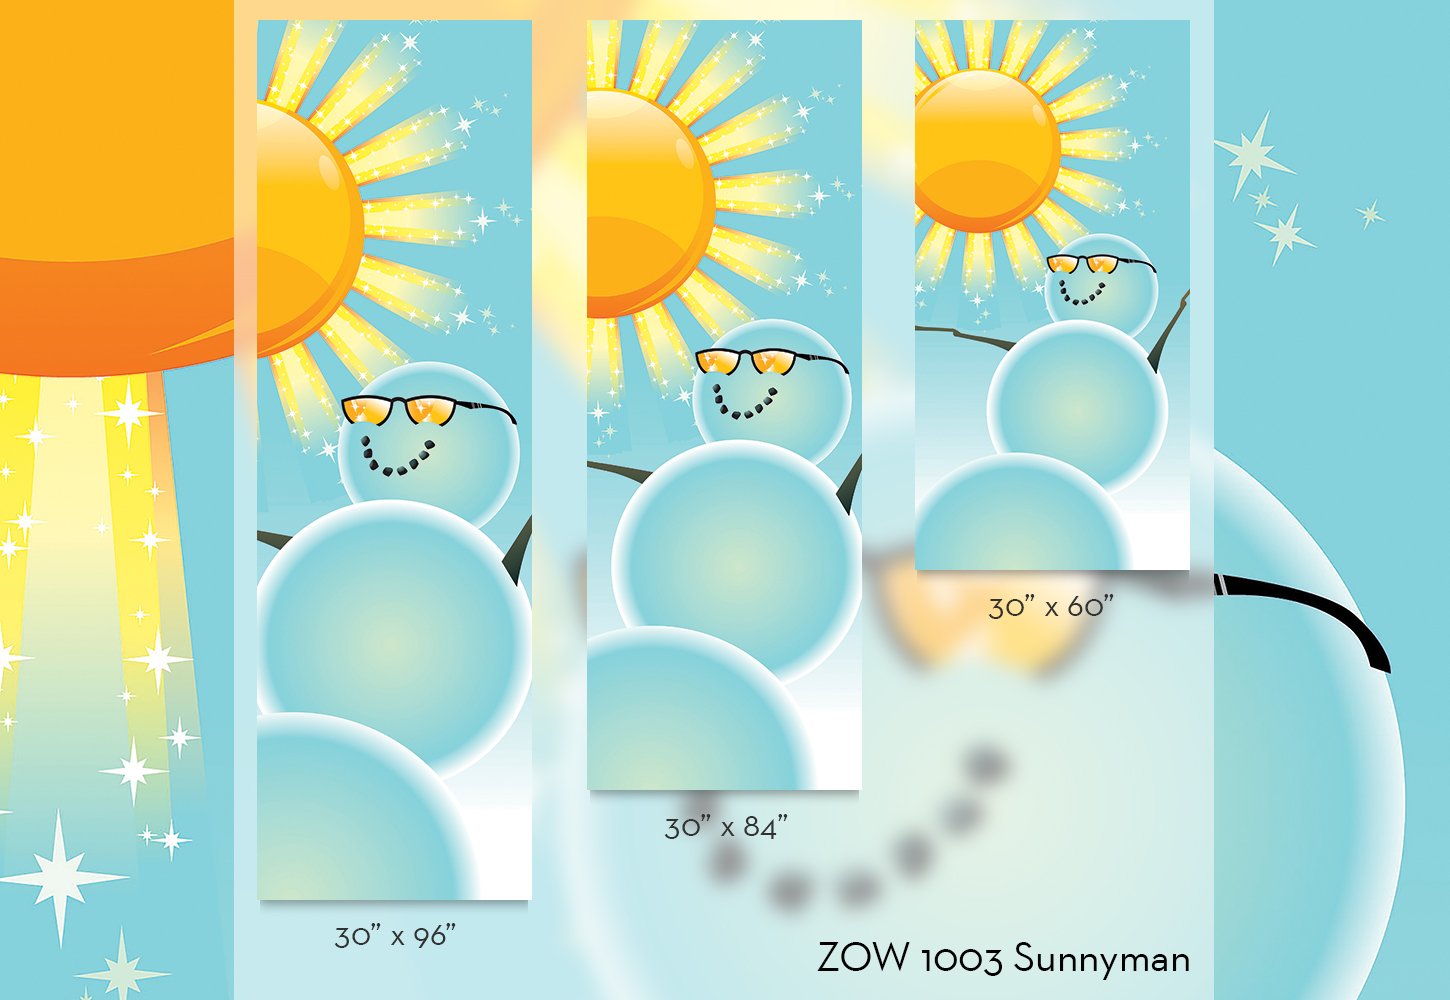 ZOW 1003 Sunnyman